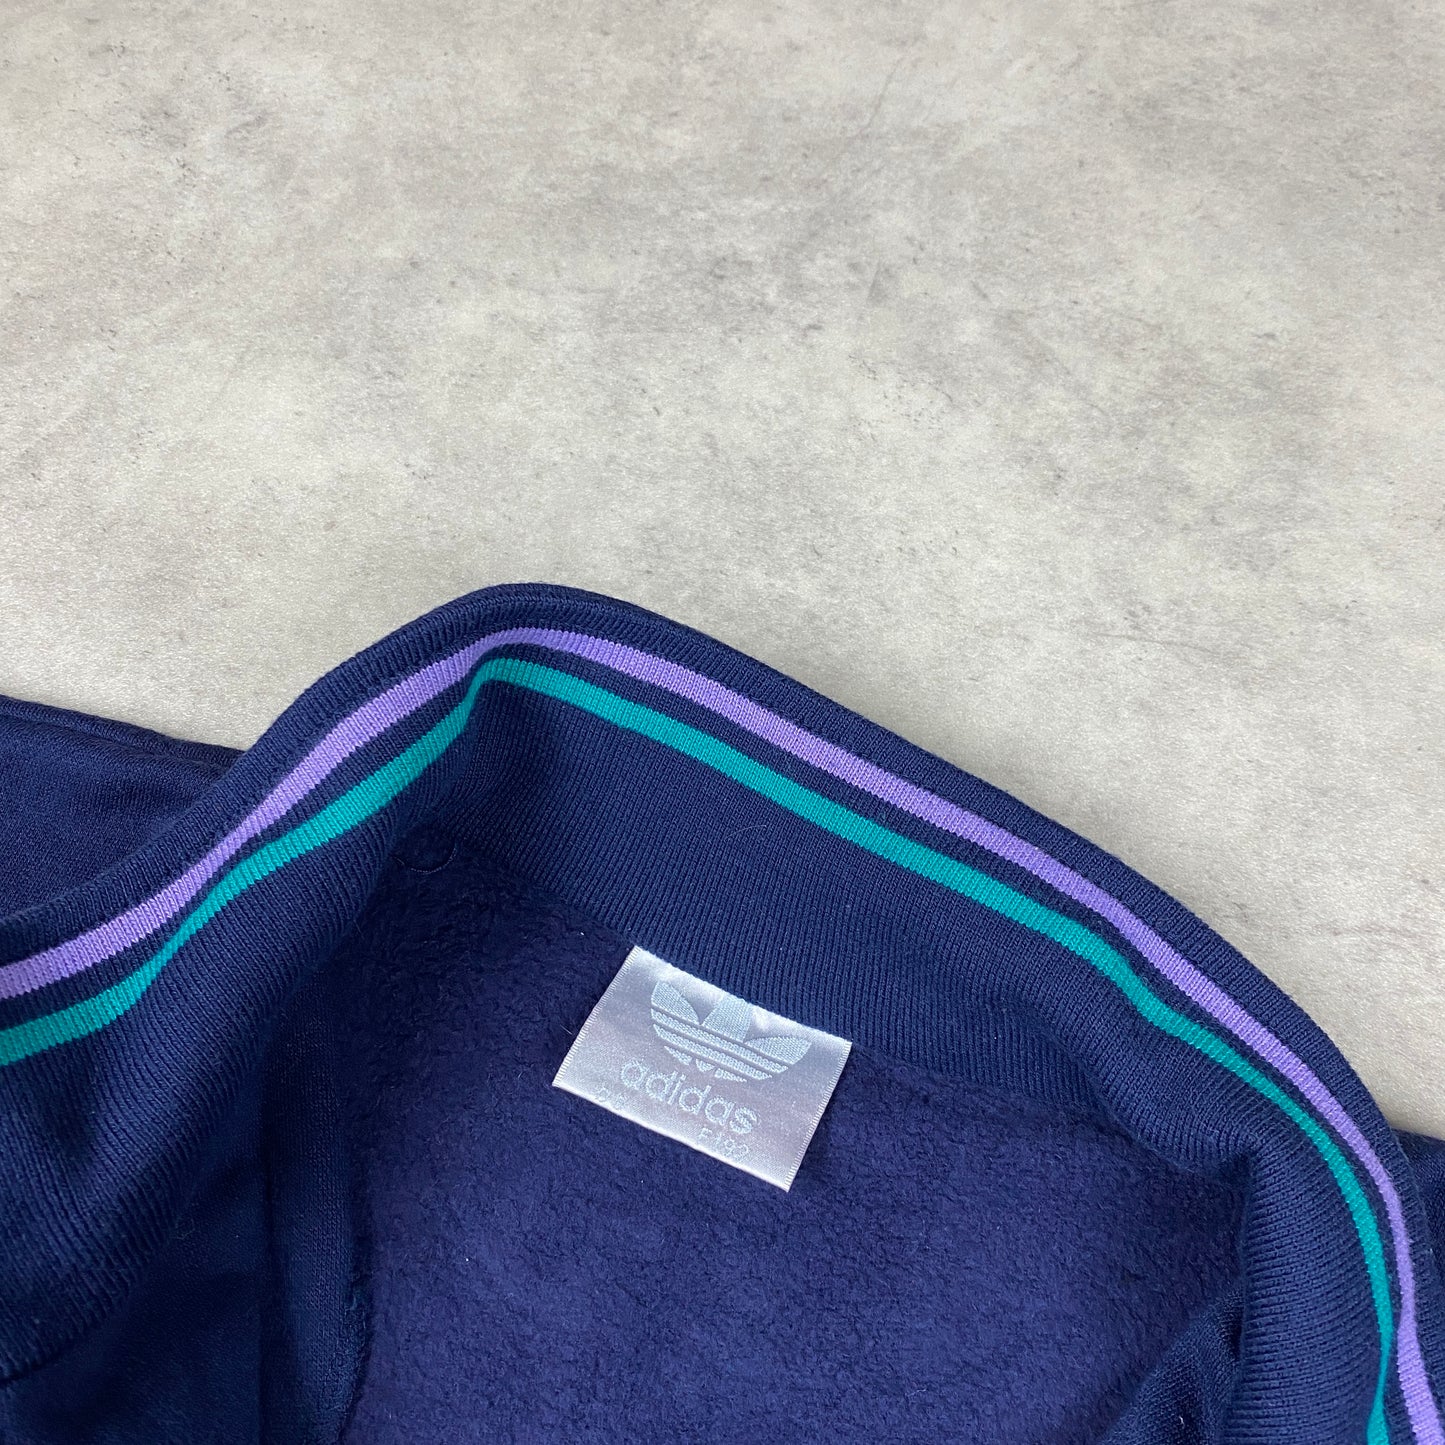 Adidas RARE heavyweight zip sweater (XL)